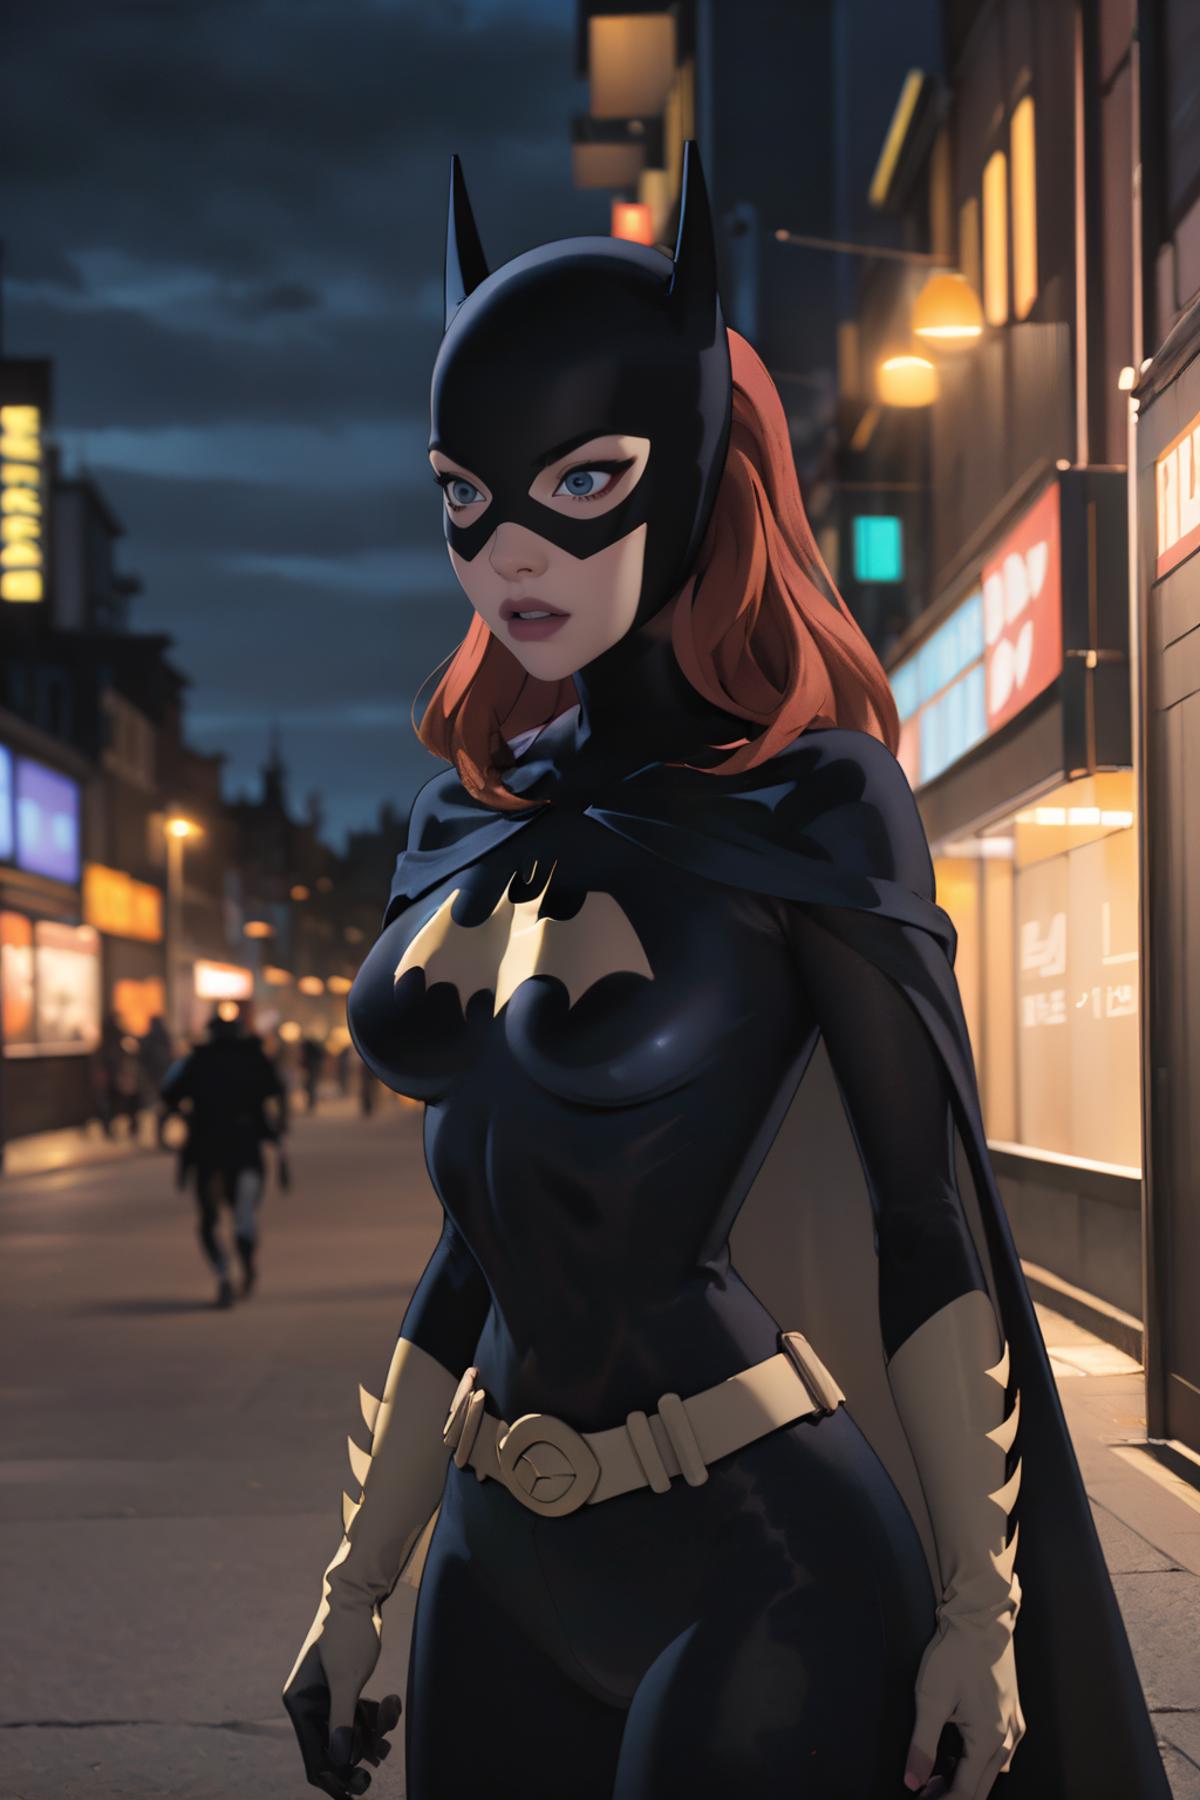 A cartoon illustration of a woman in a Batman costume.